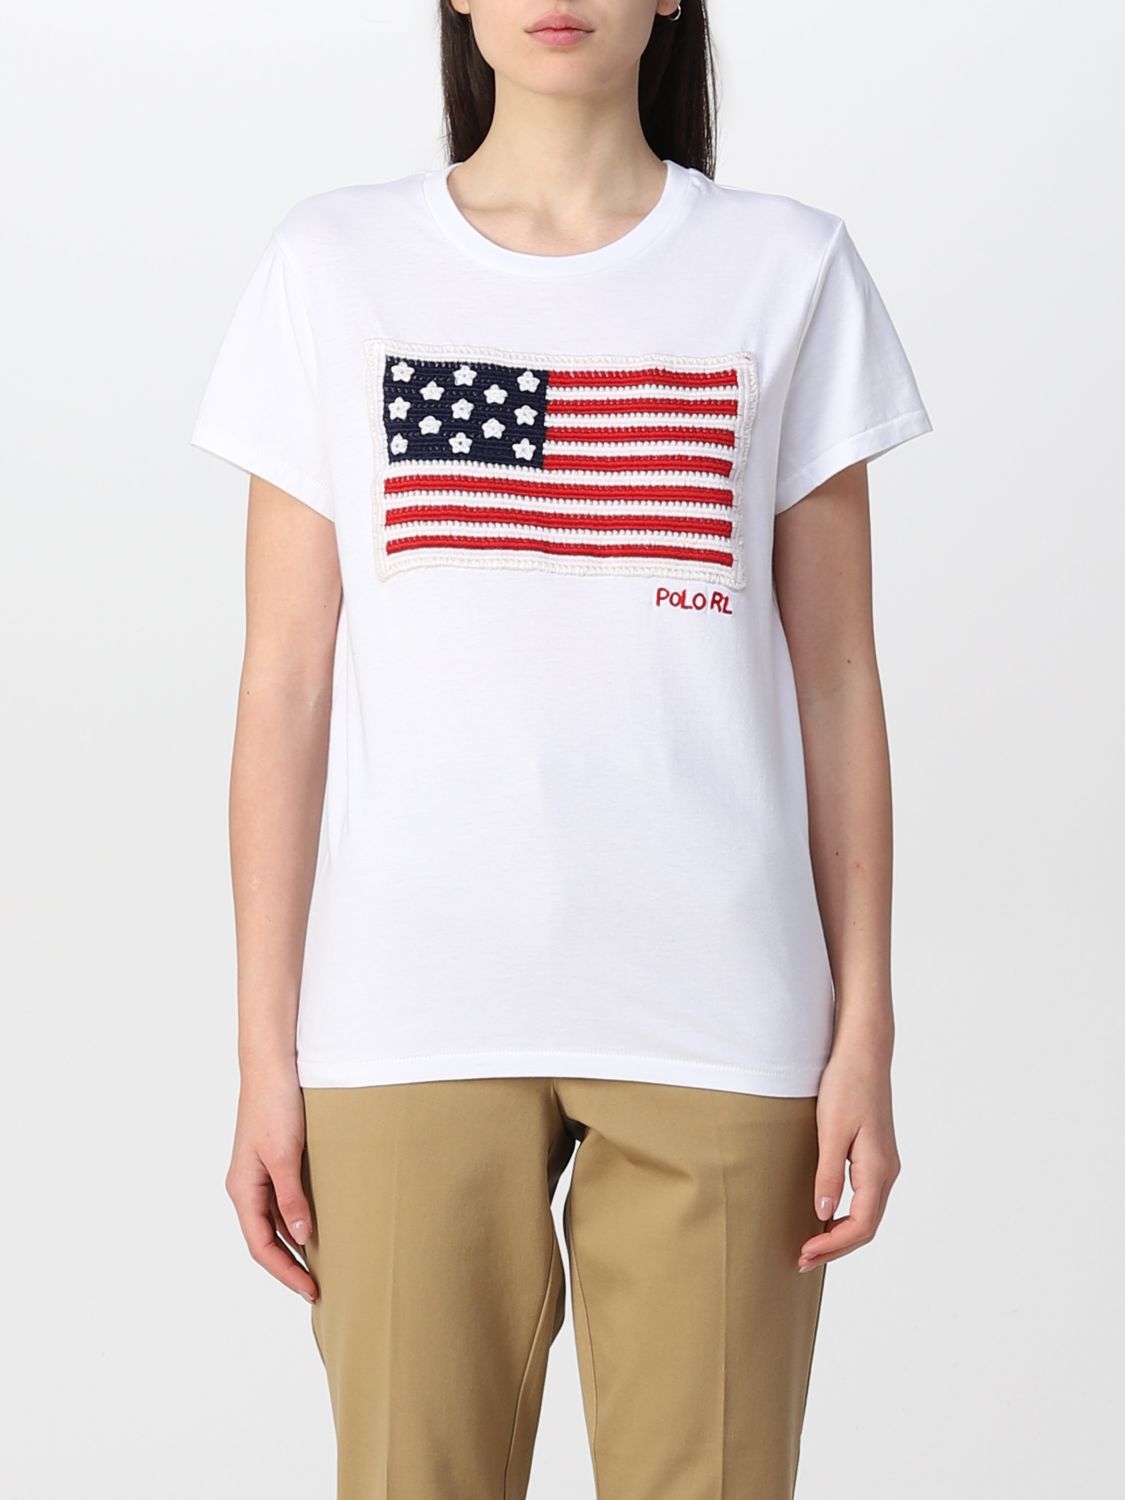 POLO RALPH LAUREN: flag T-shirt - White | Polo Ralph Lauren t-shirt  211863300 online on 